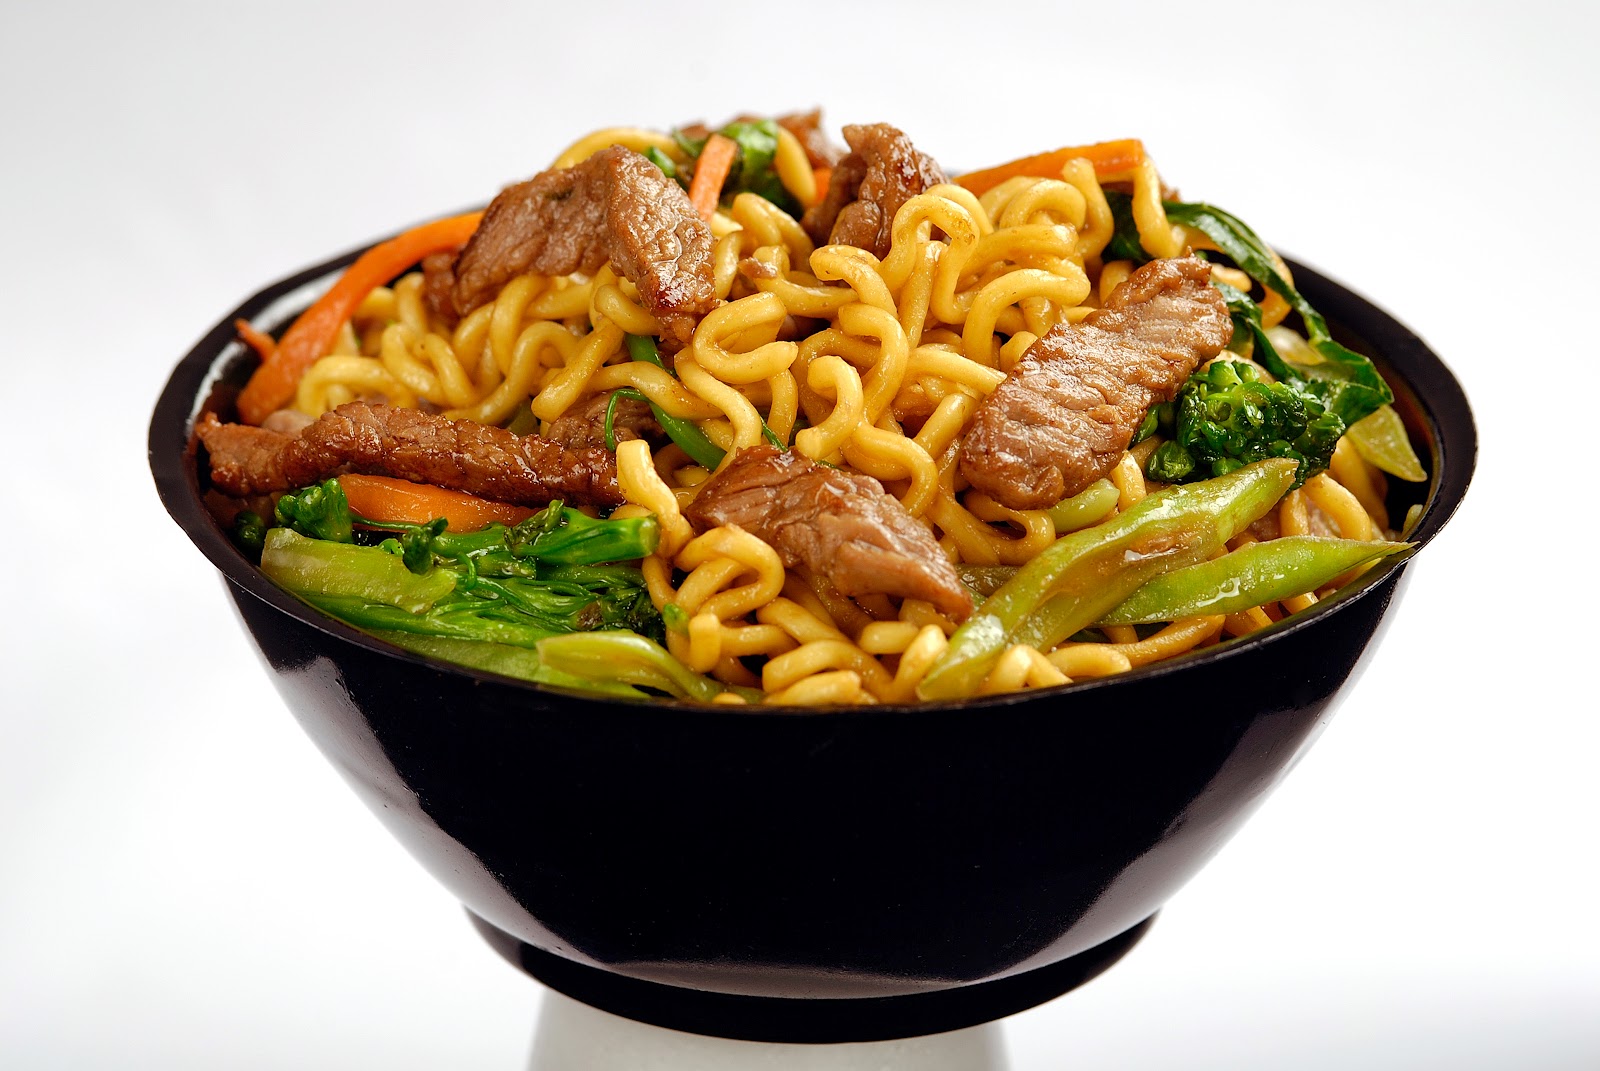 Asian noodles varieties